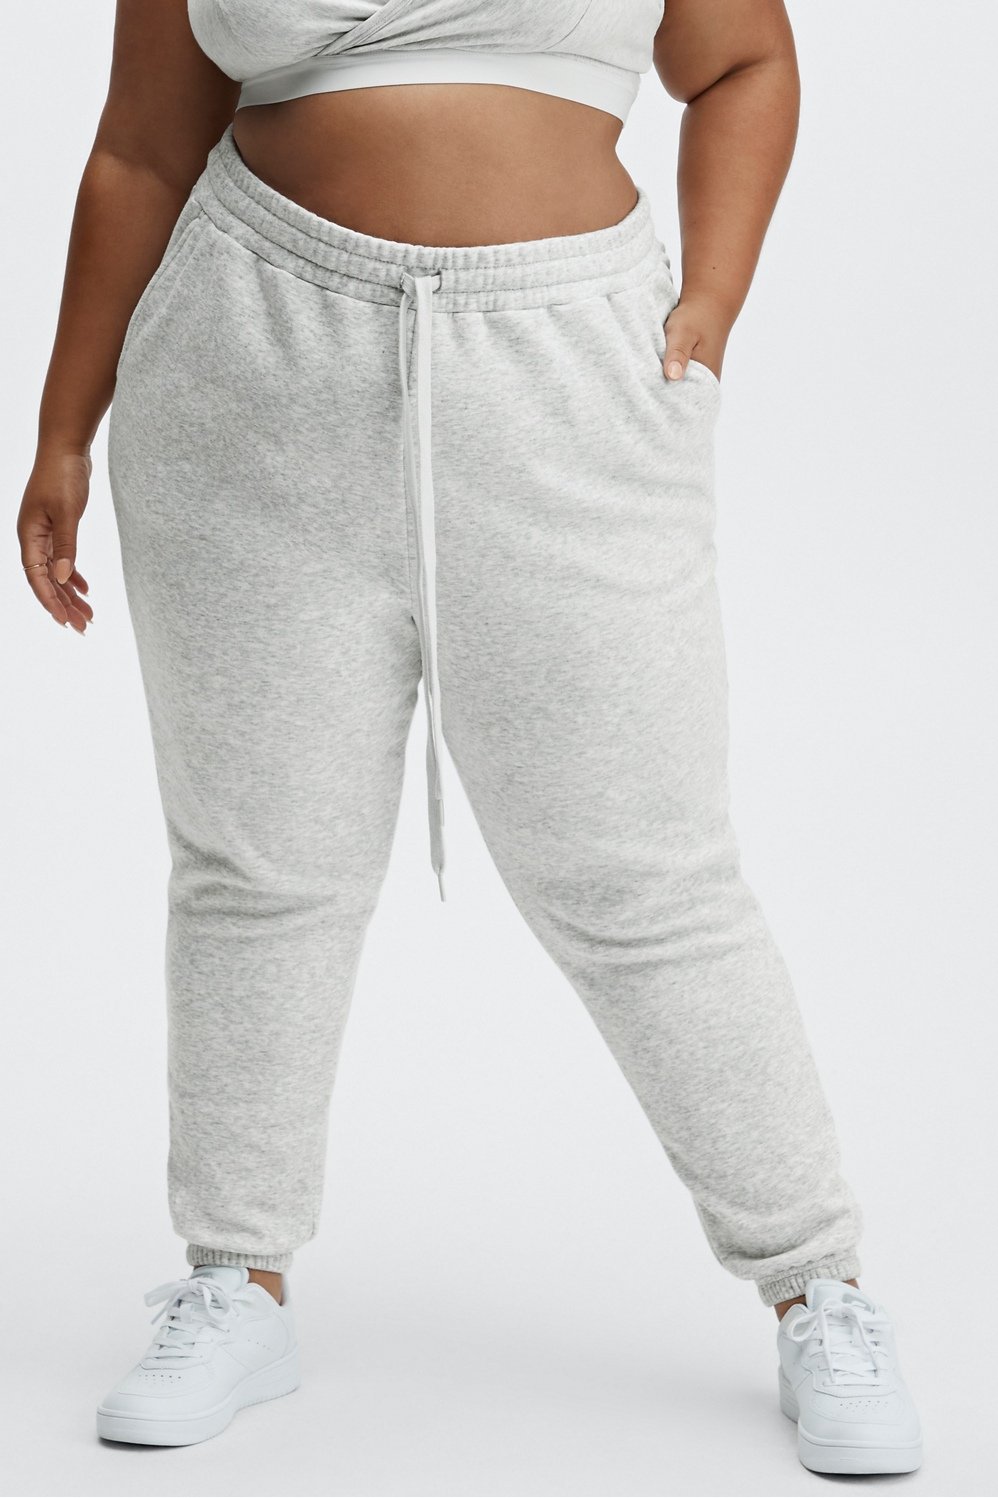 Women's sweatpants PLR046 - dark grey